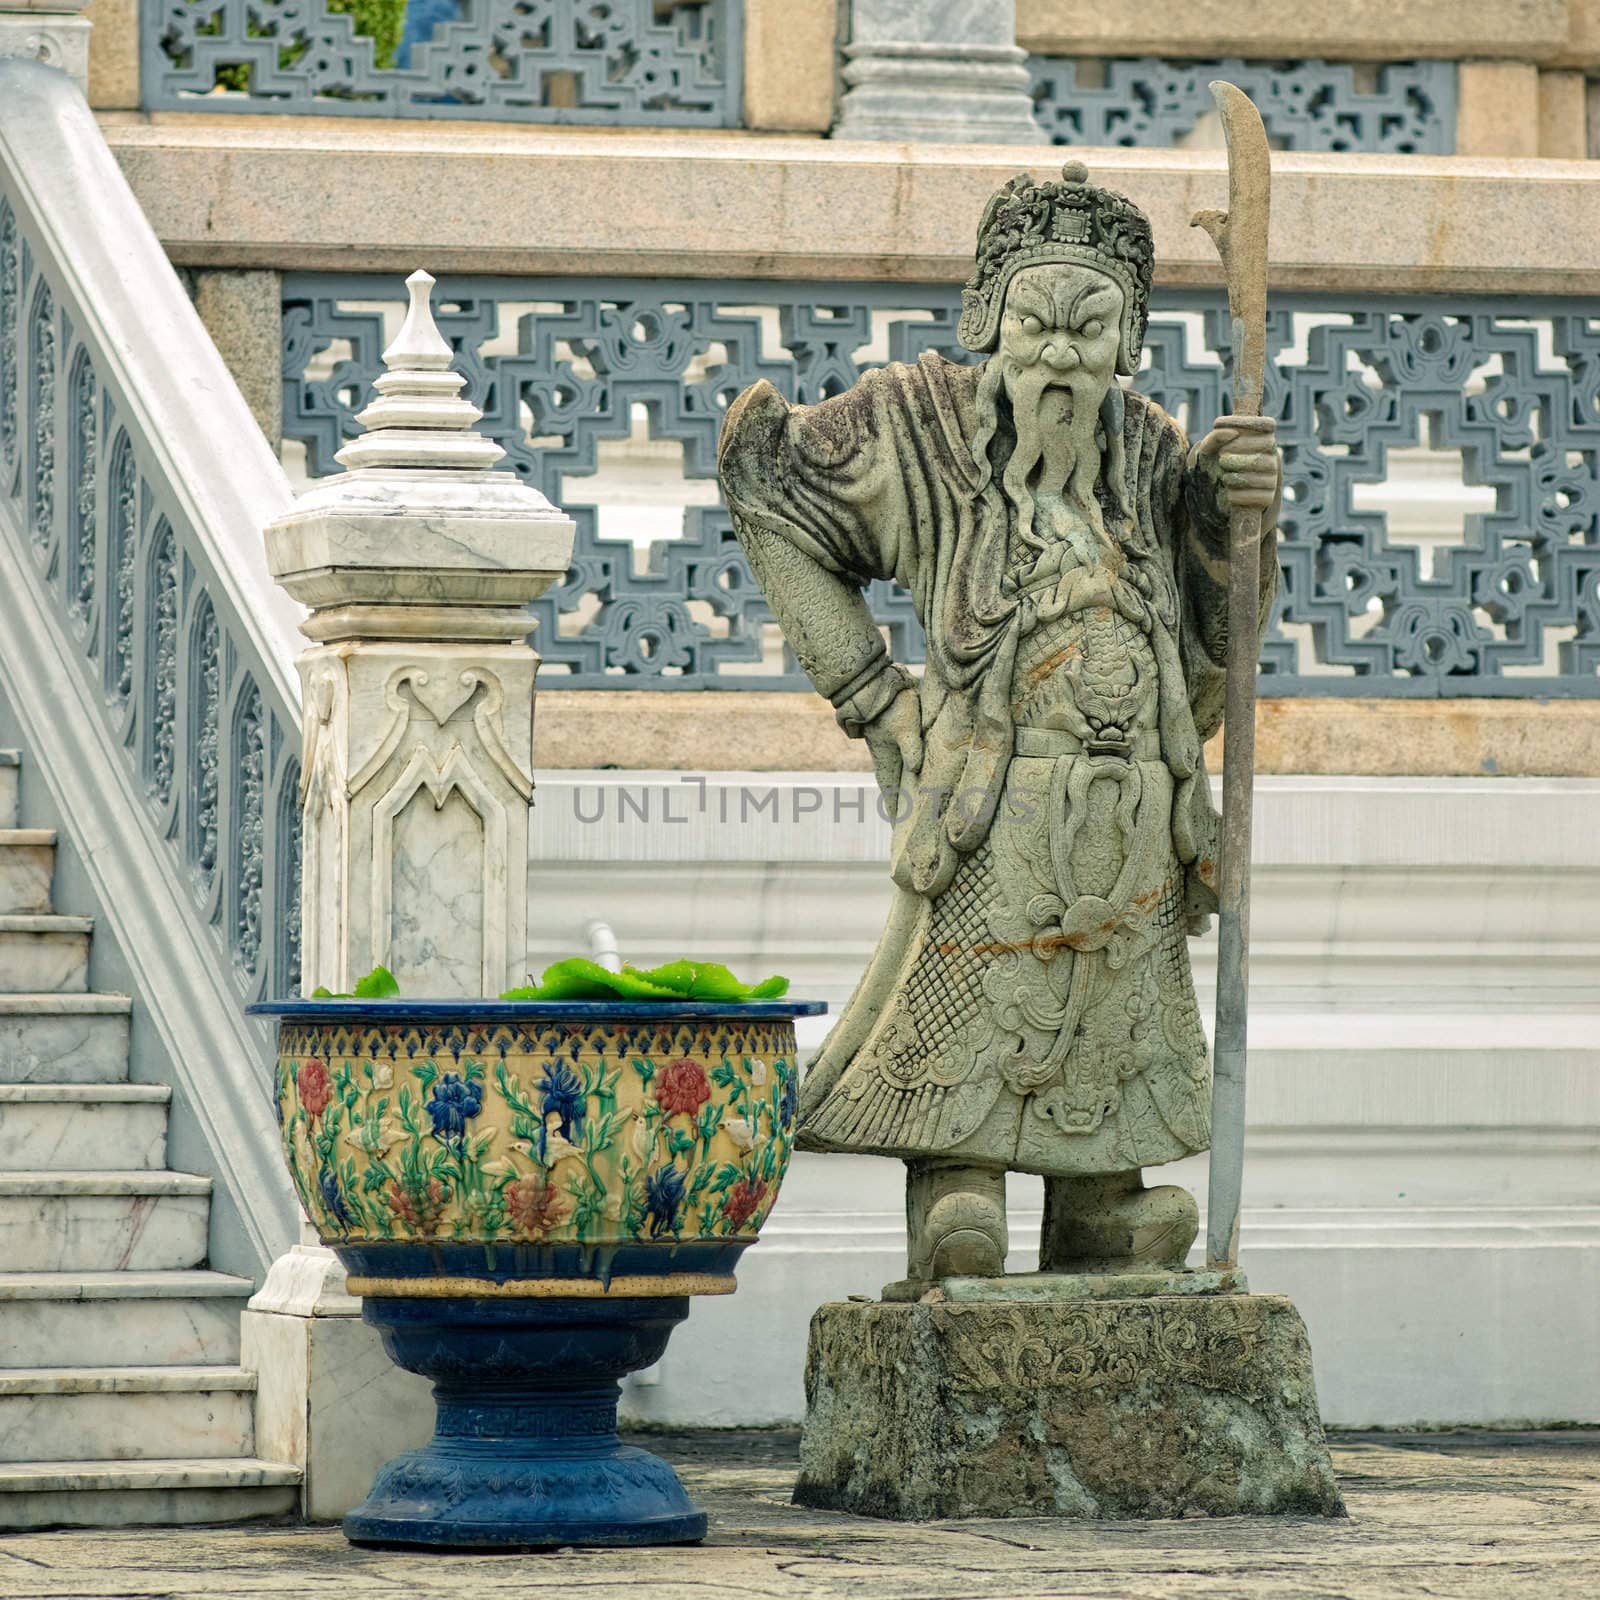 Sculpture of mythological guardian in Grand Palace, Bangkok, Thailand